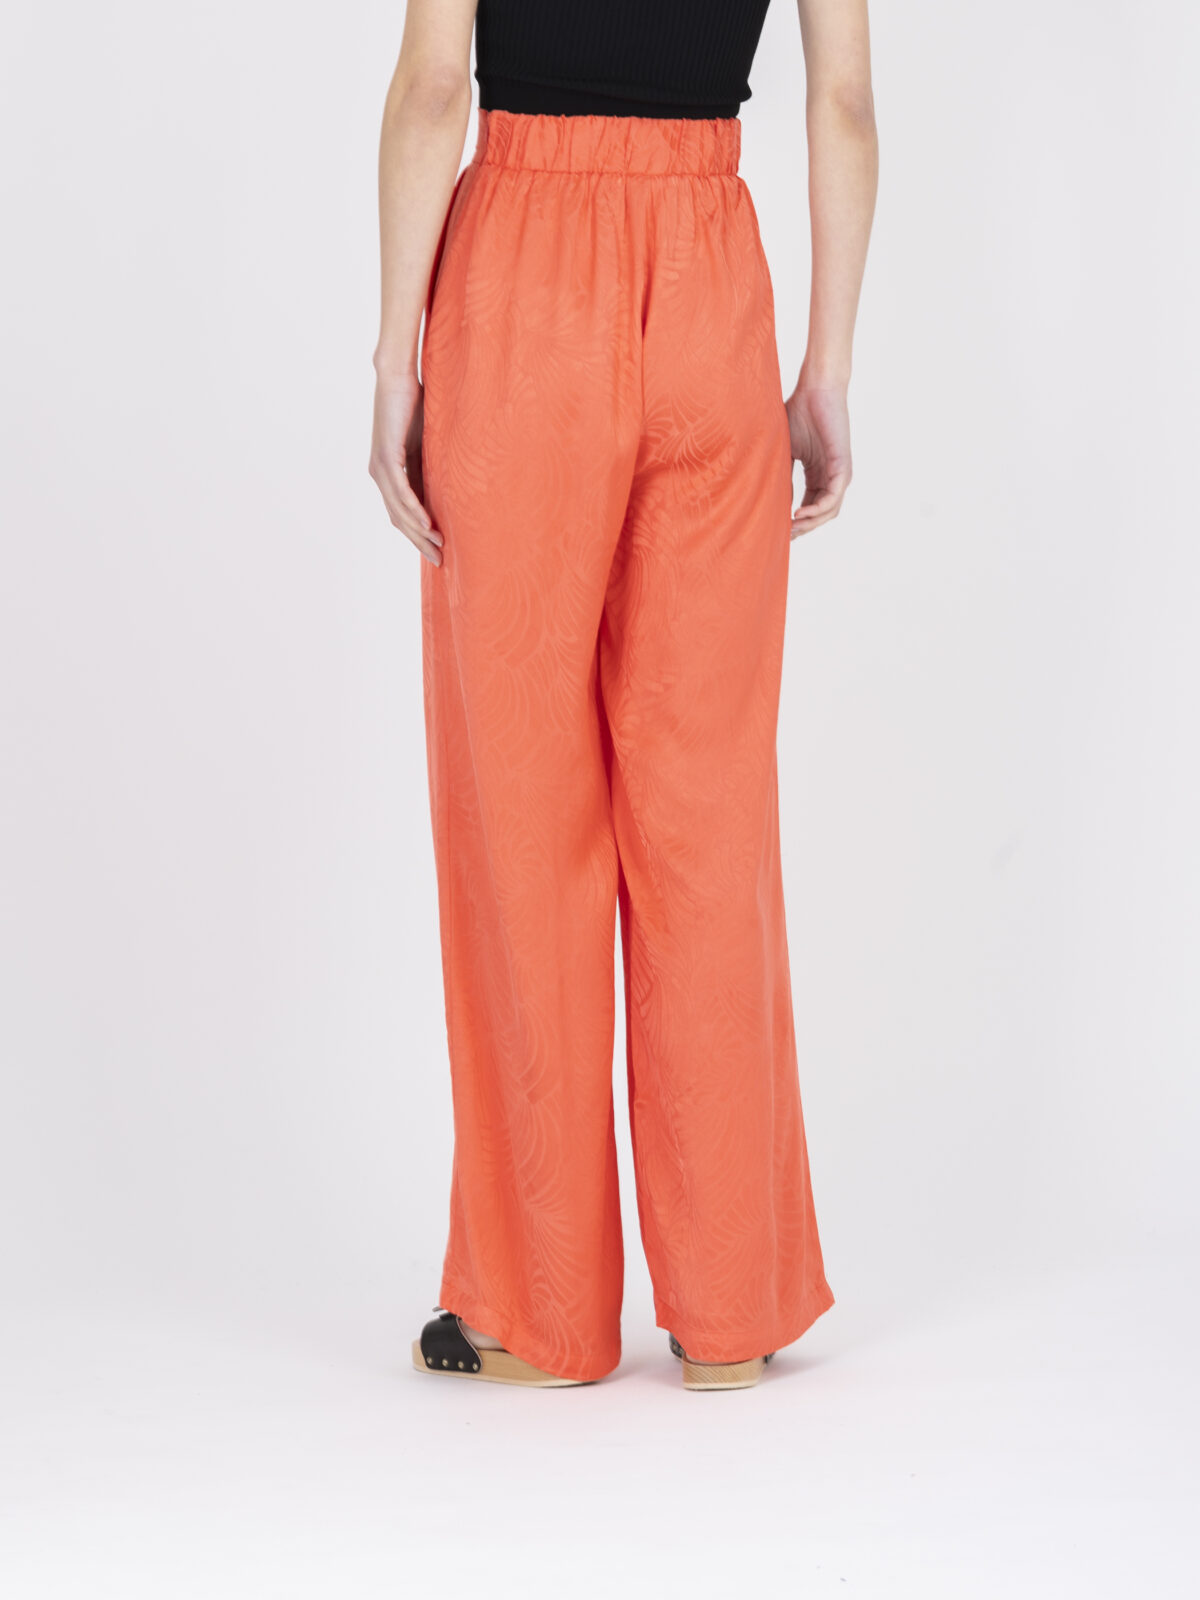 juncle-orange-fluid-wide-leg-pants-jacquard-suncoo-matchboxathens